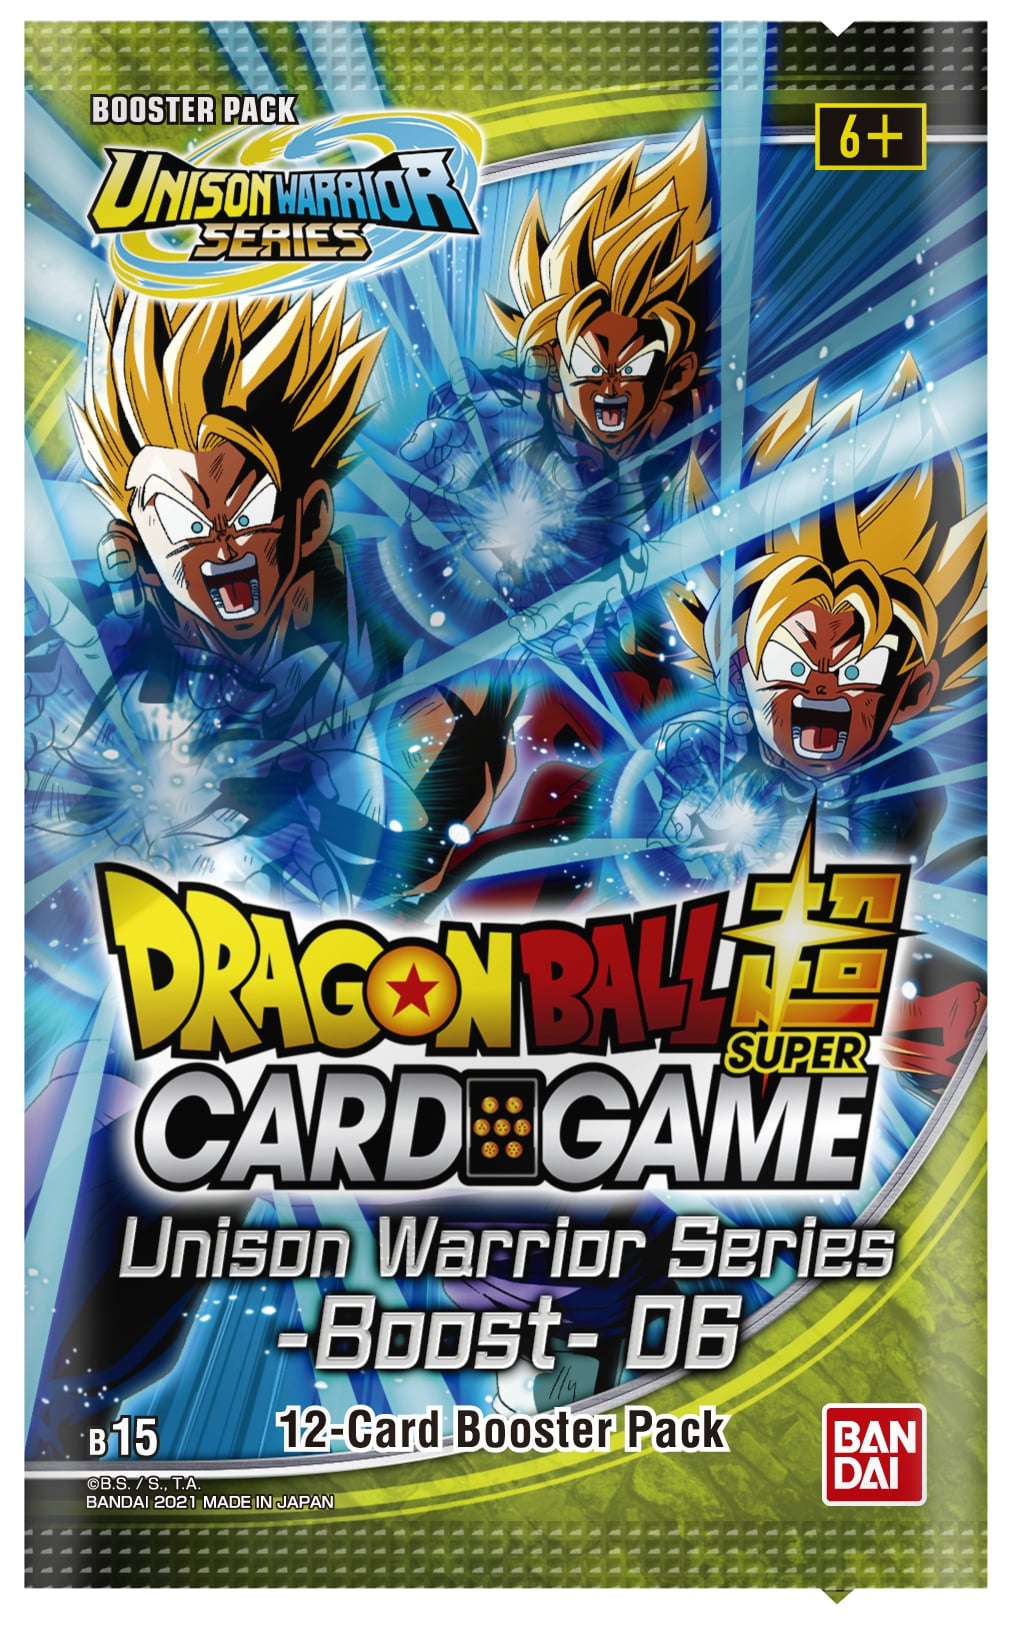 CULTURE GEEK - POKEMON Trading Cards, Dragon Ball, Magic